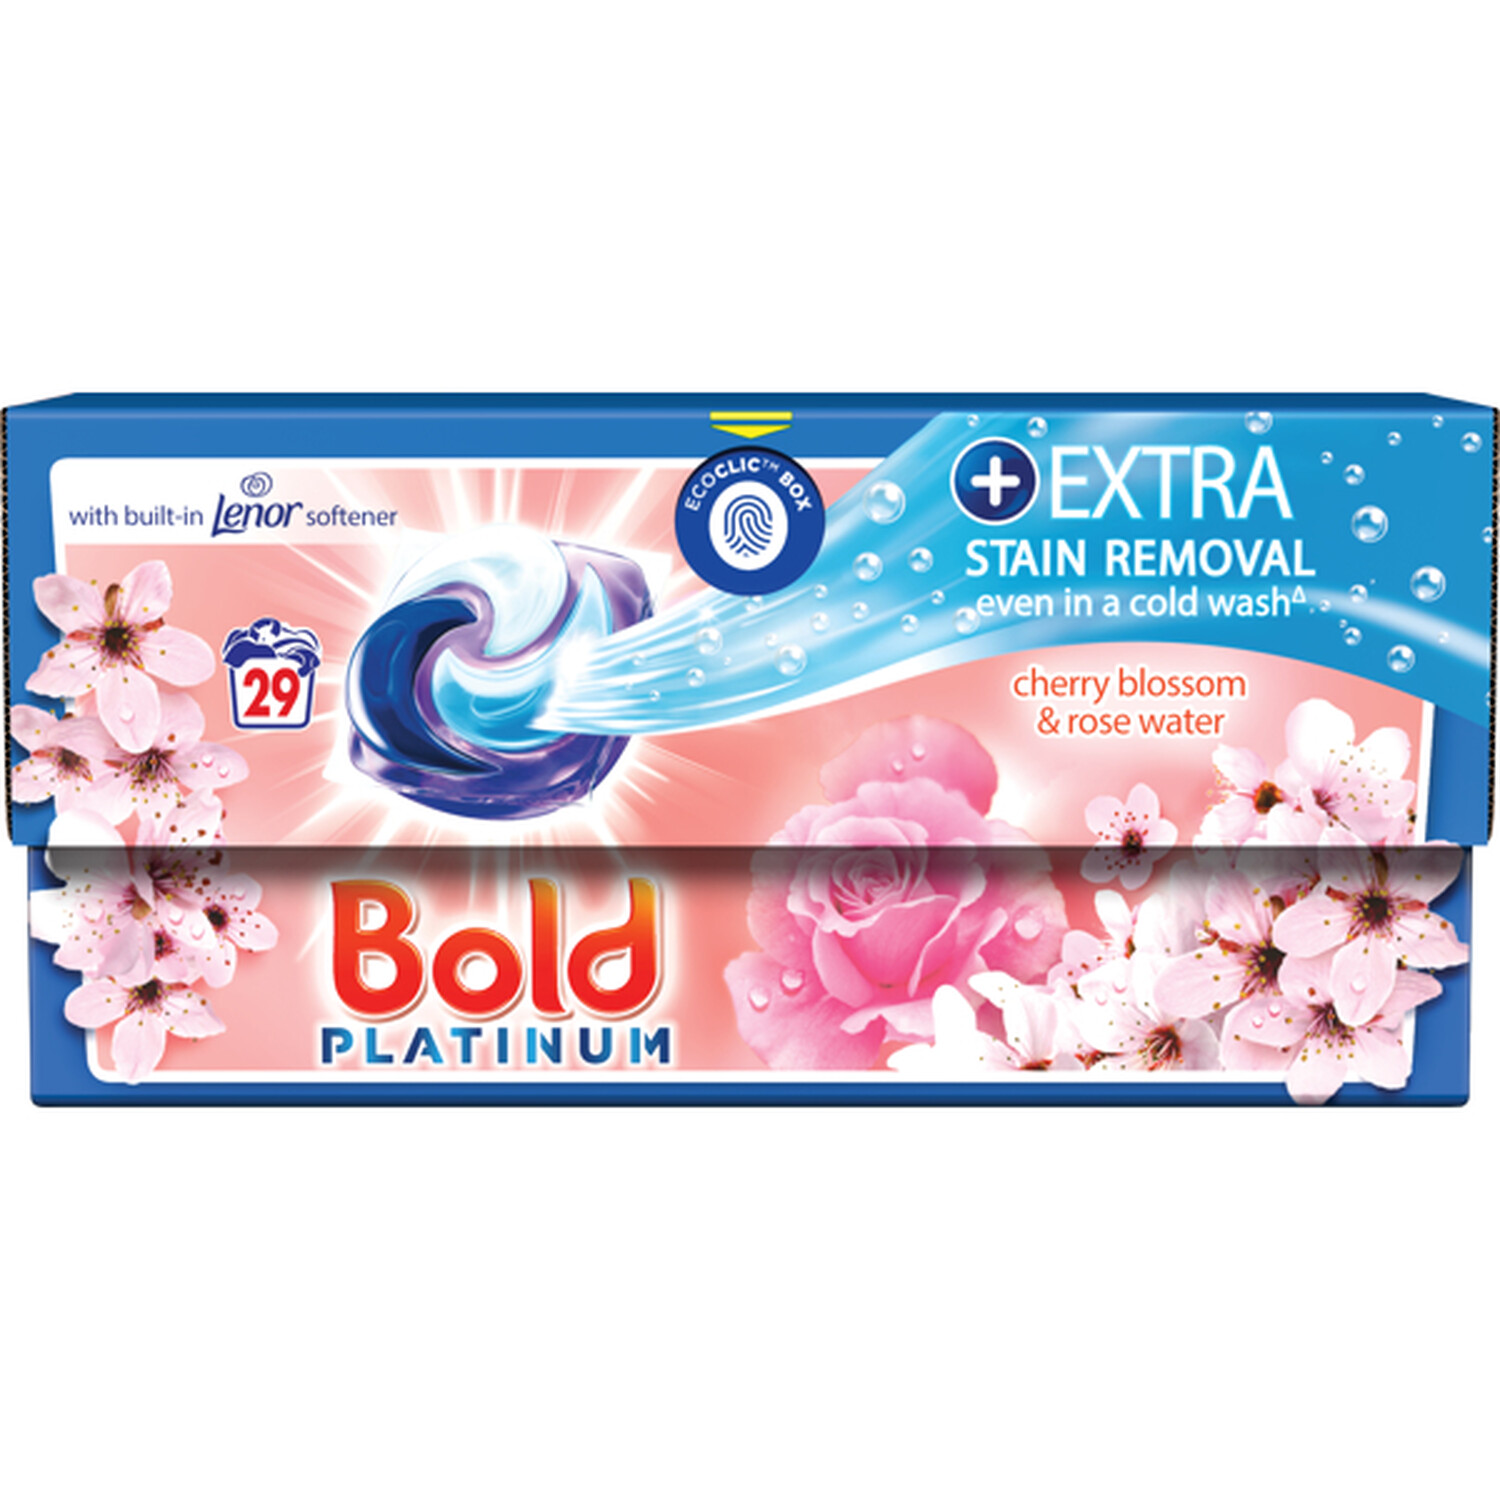 Bold Platinum Cherry Blossom Laundry Pods Image